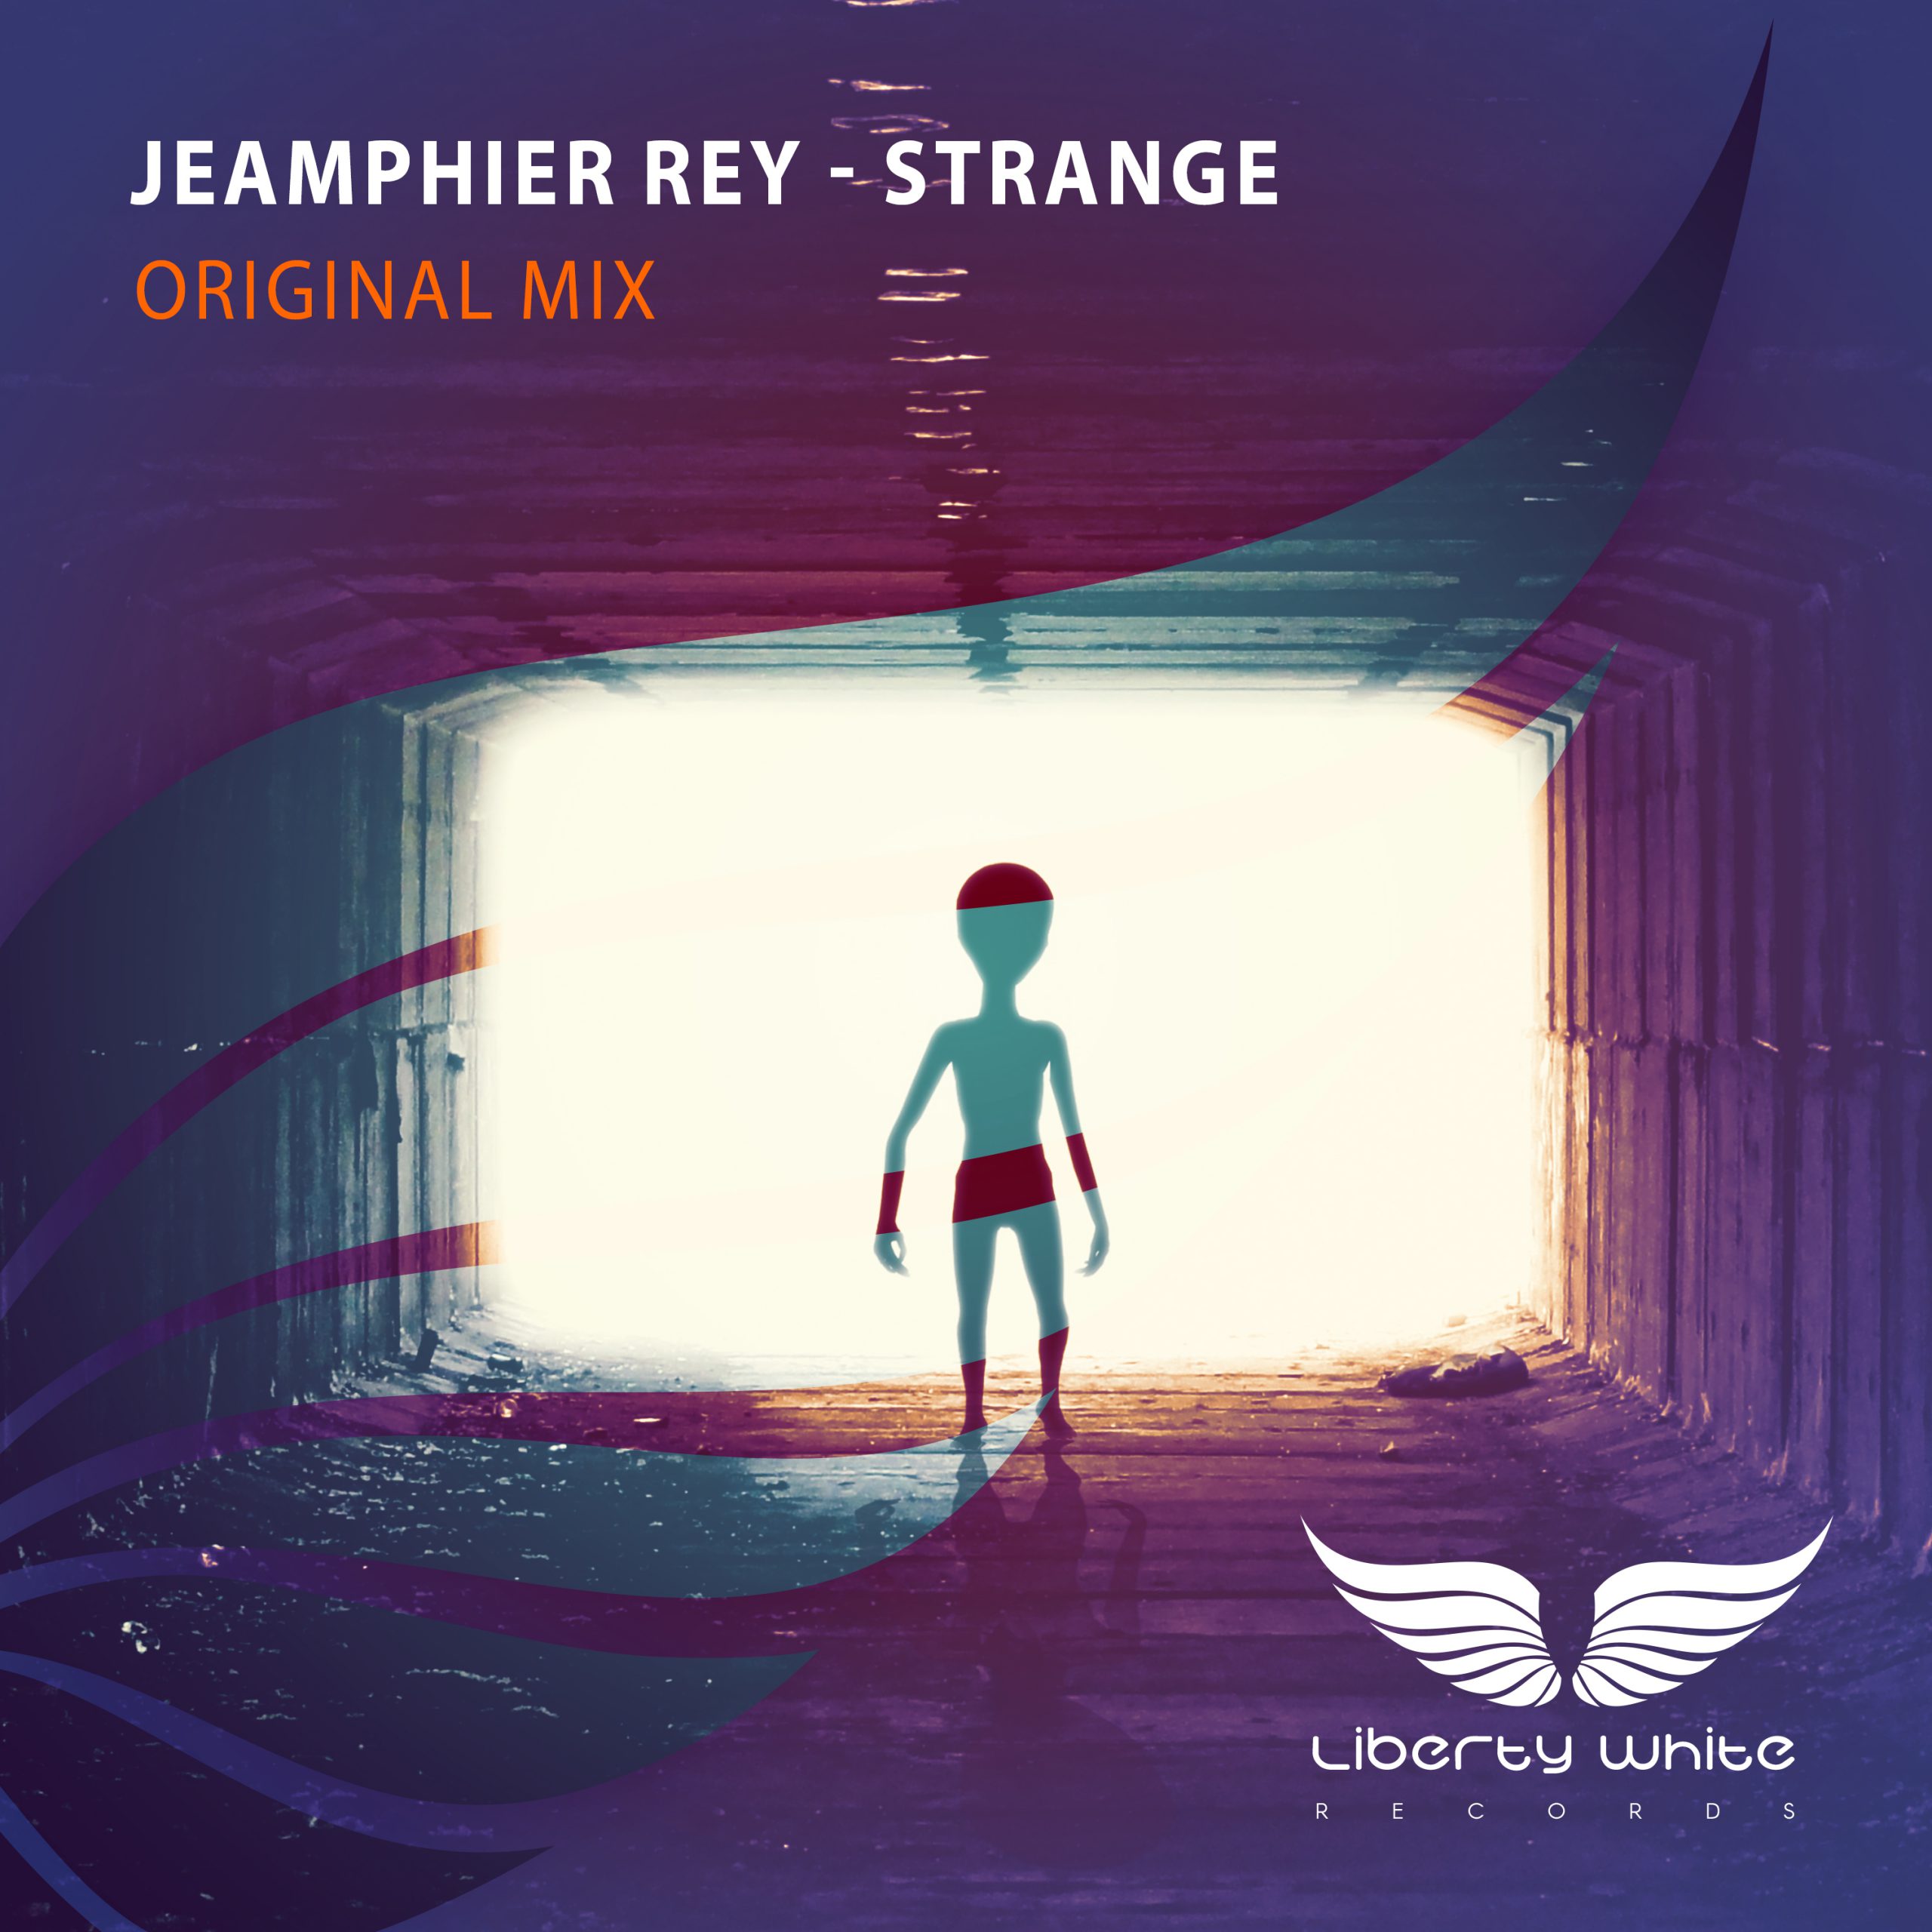 jeamphier rey strange Original Mix scaled